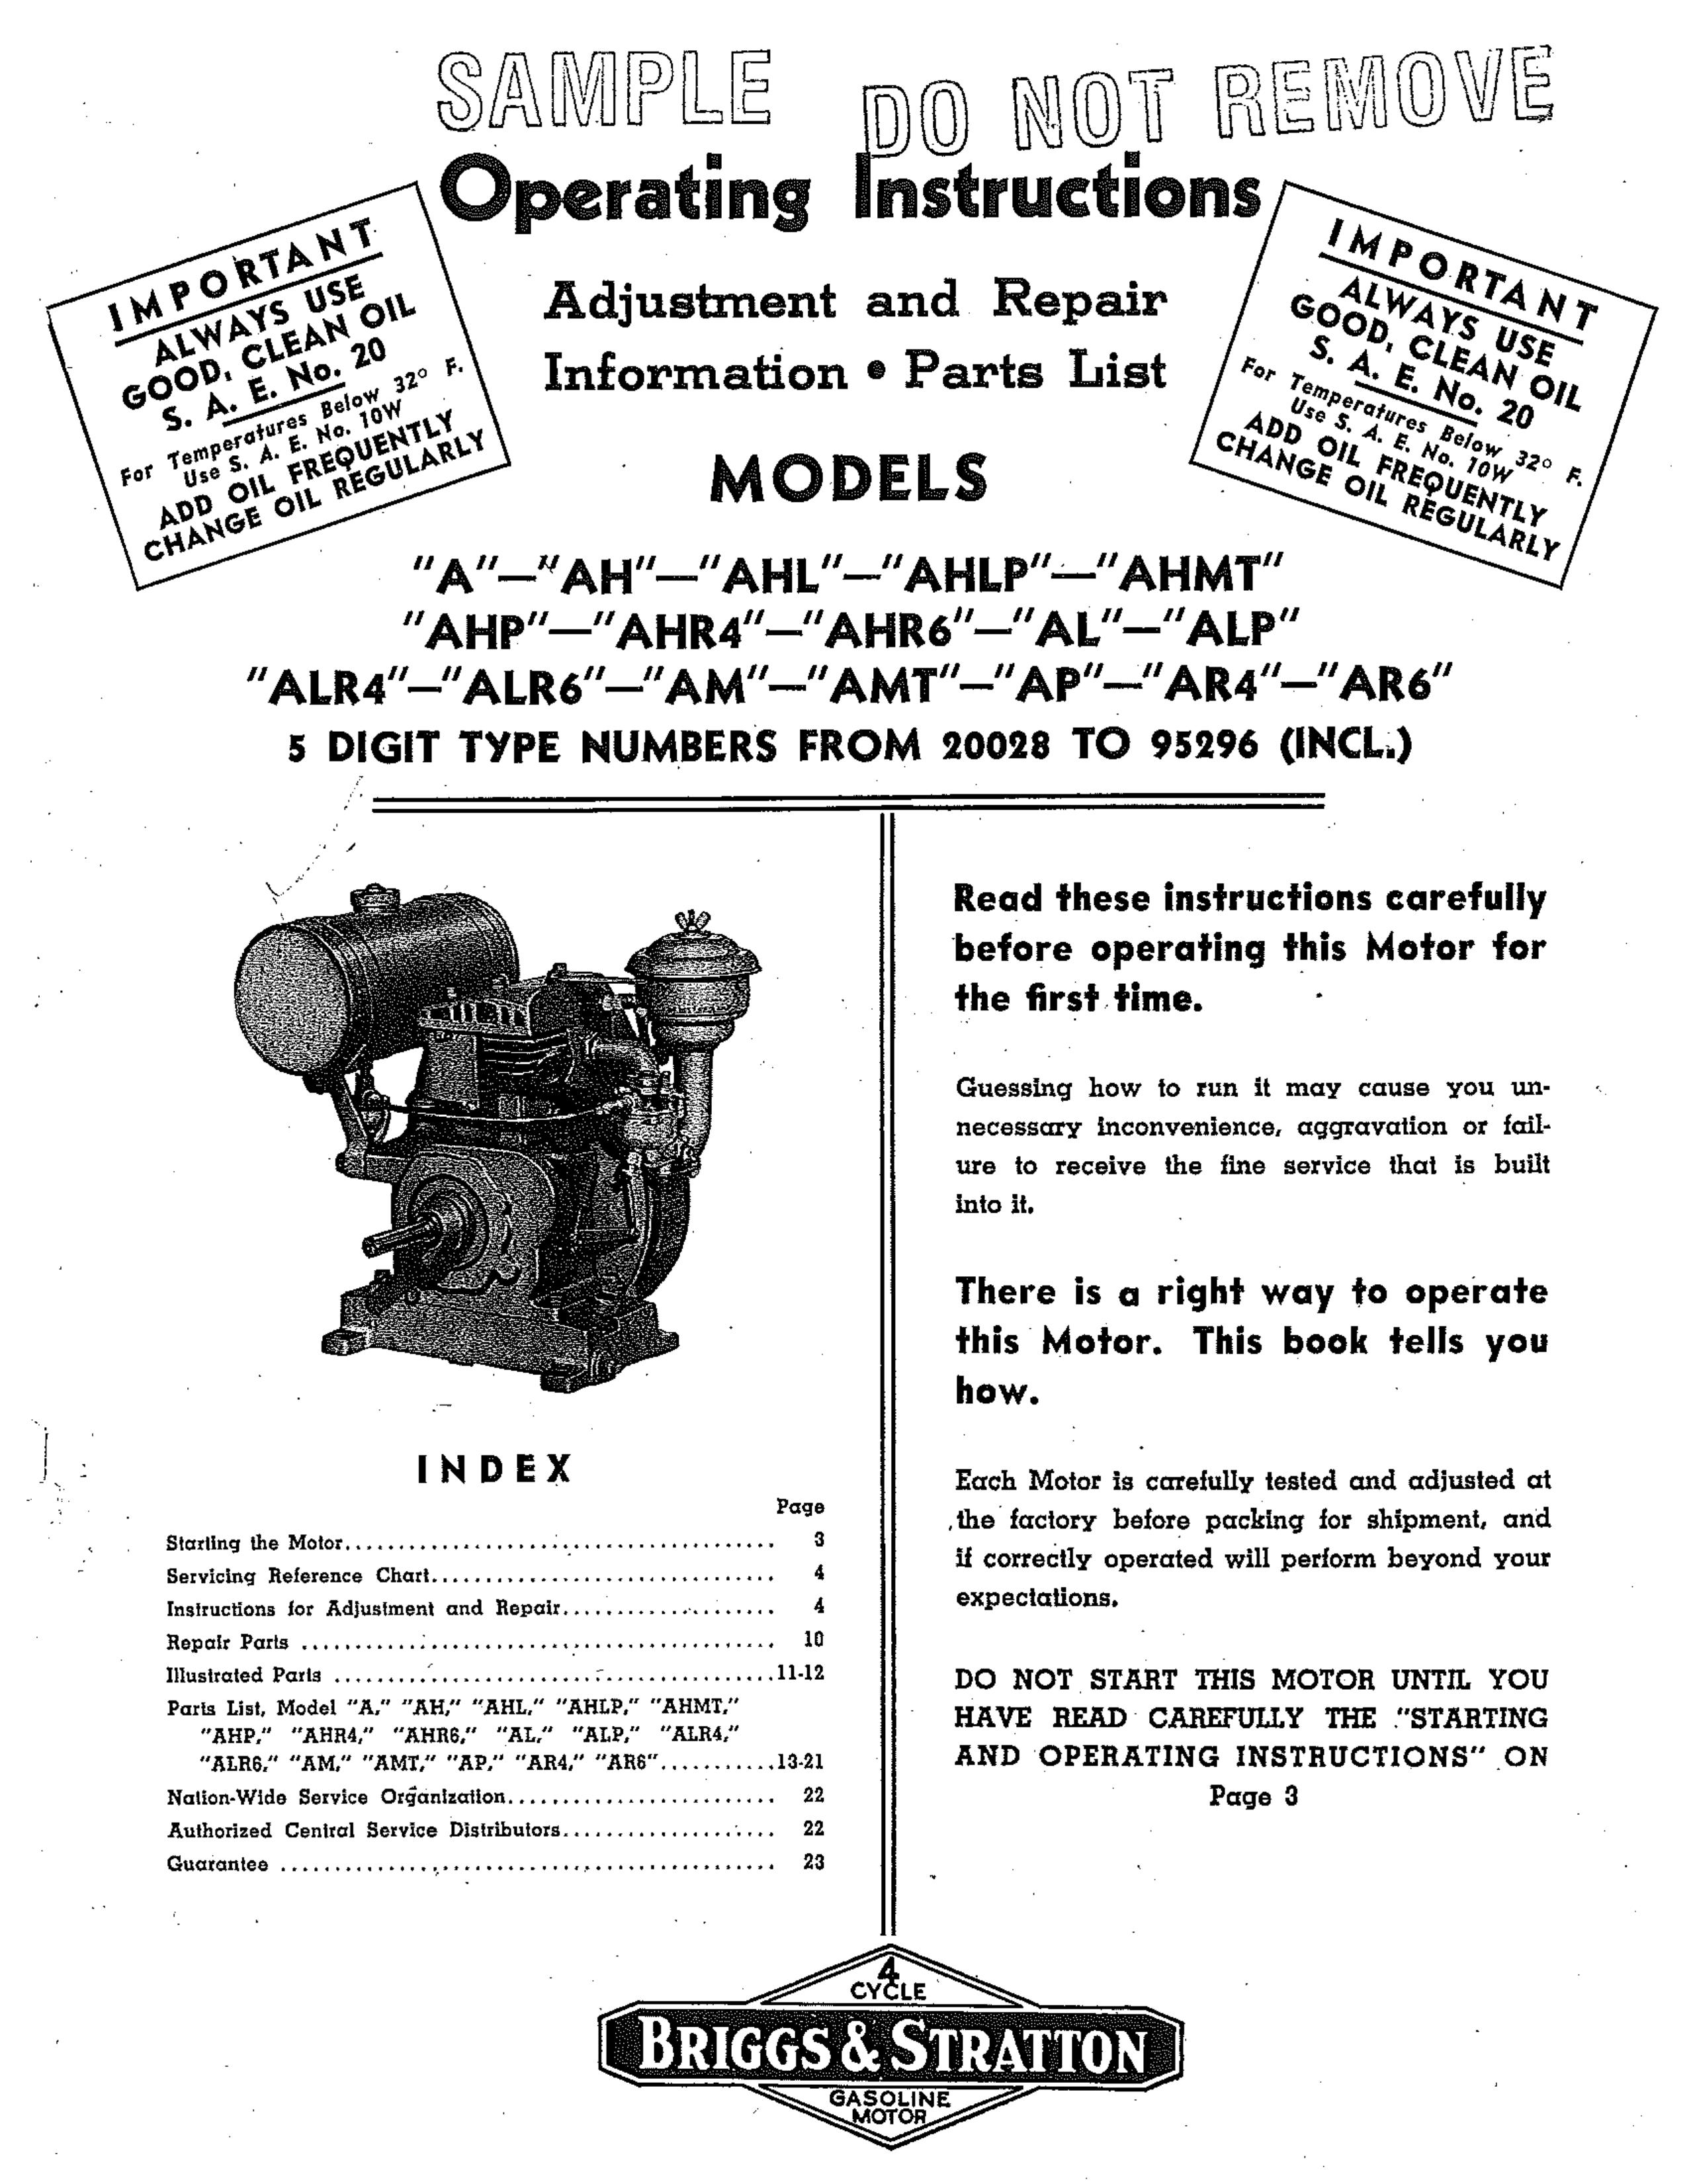 Briggs & Stratton AHMT Outboard Motor User Manual